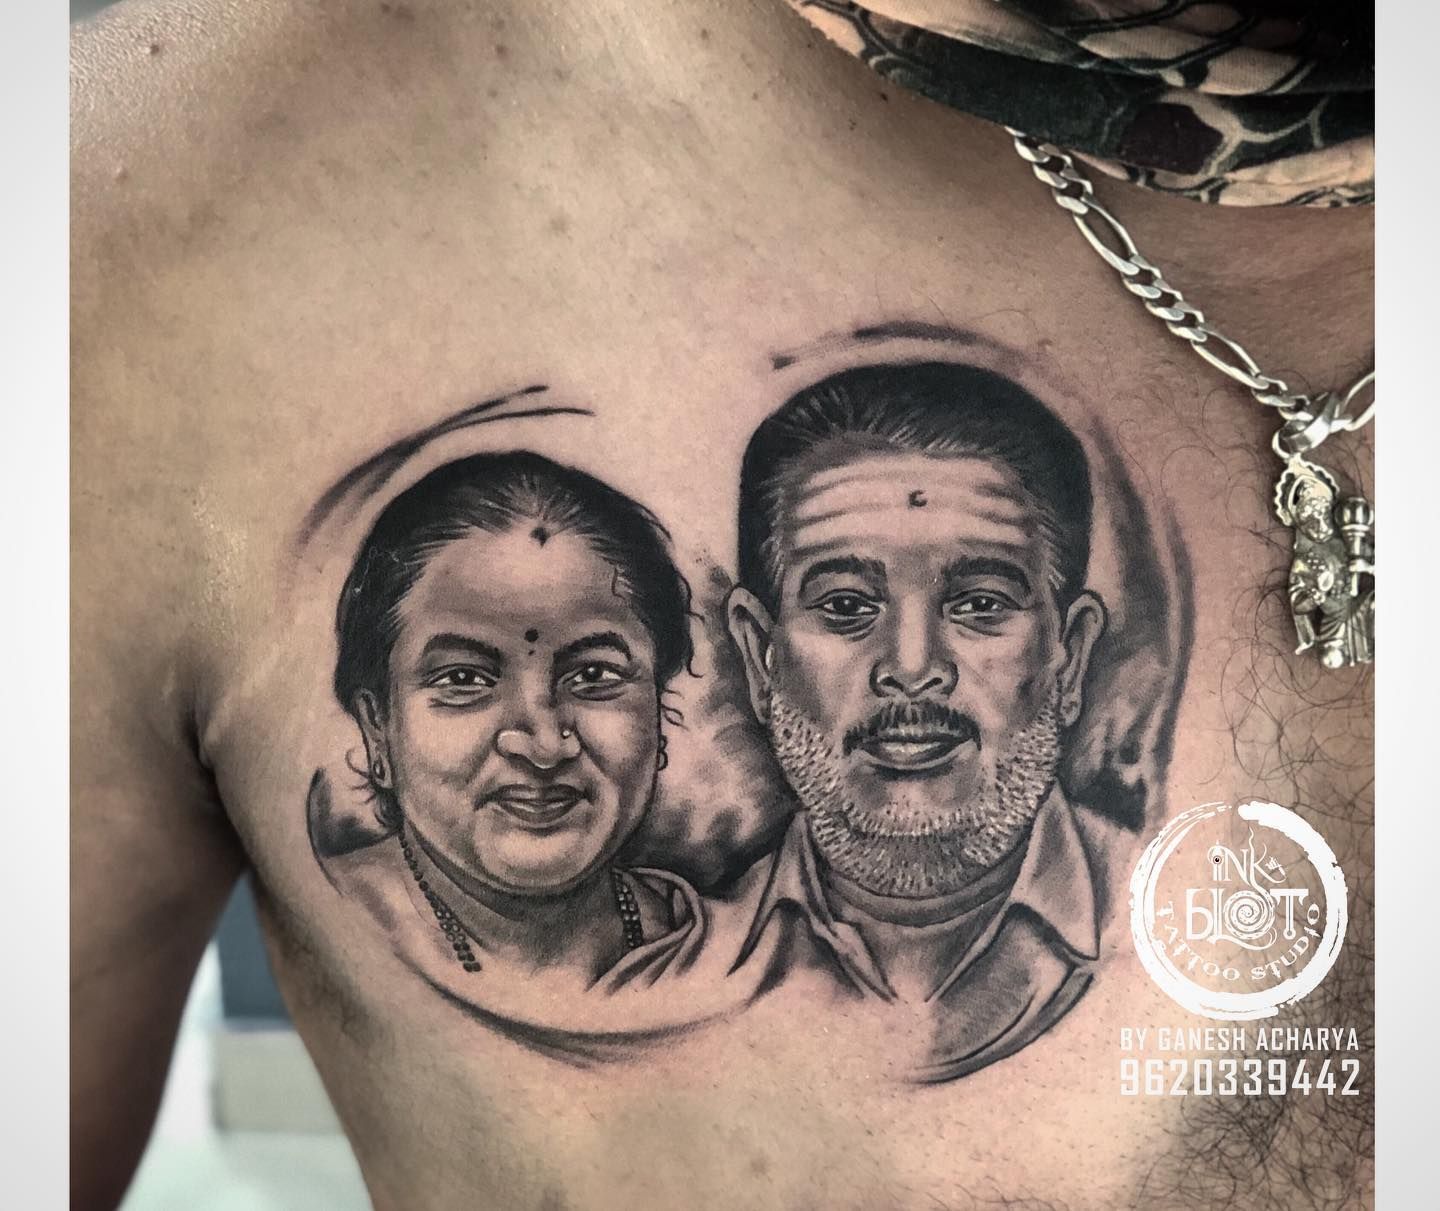 Frank Sanchez  Tattoos  Francisco Sanchez  black and grey portrait tattoo